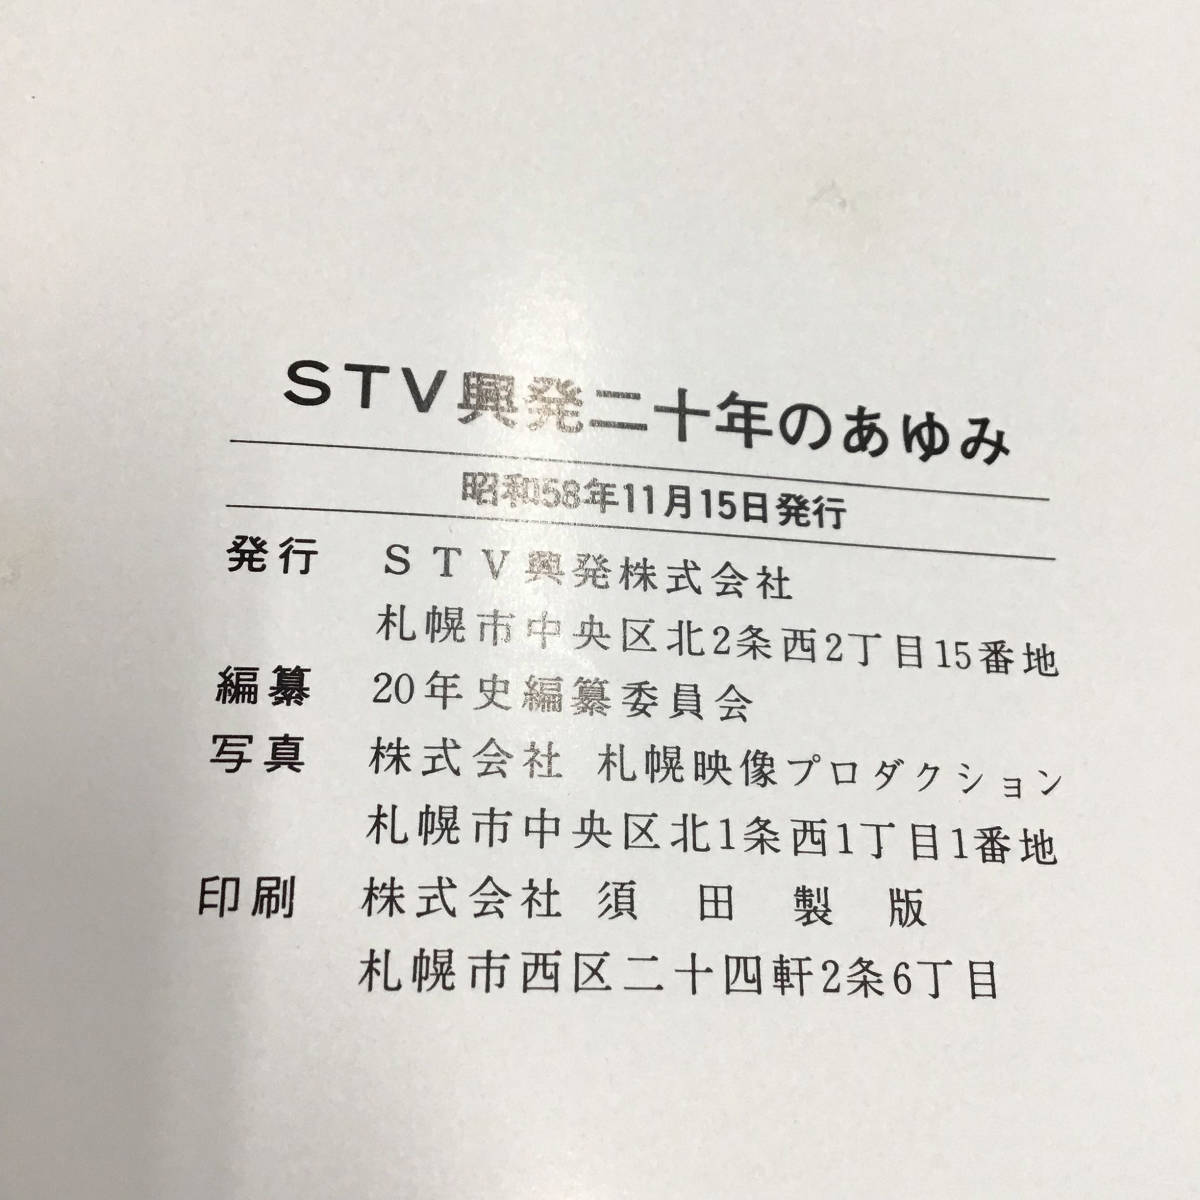 22R183 1 STV. departure two 10 year. ... Showa era 58 year 11 month 15 day issue STV. departure corporation STV. history Showa era secondhand goods 